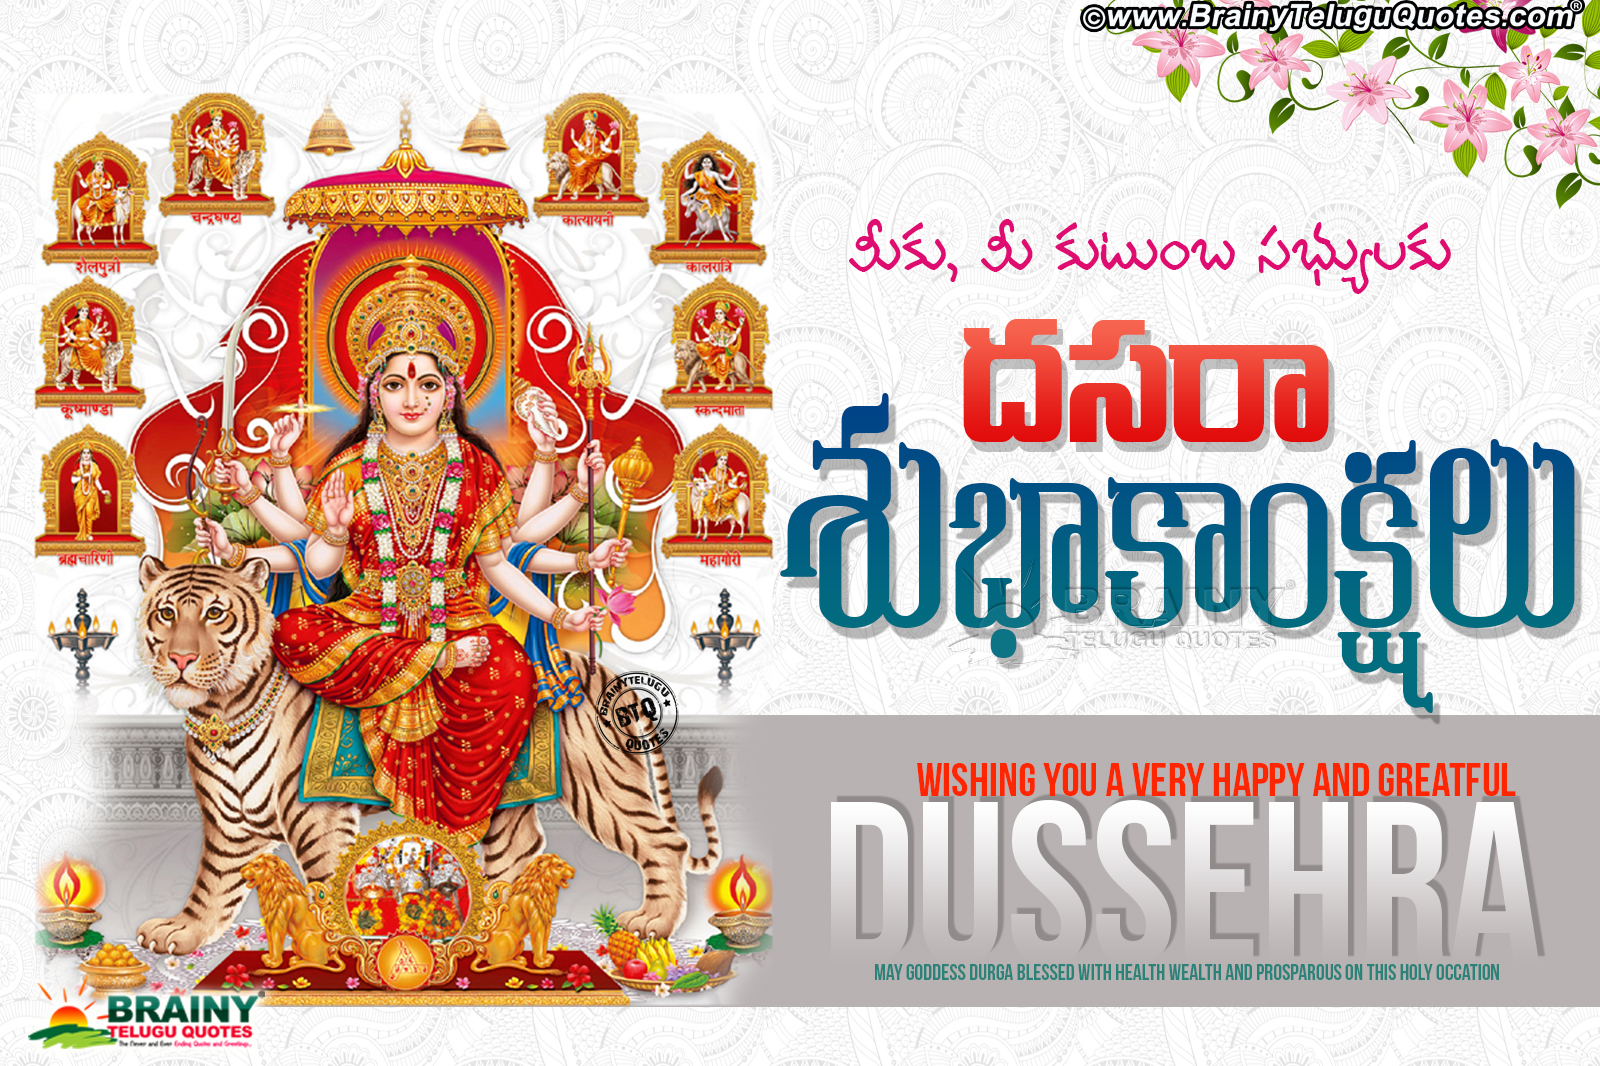 Telugu Latest Advanced Dasara Greetings 2017 Greetings images Free